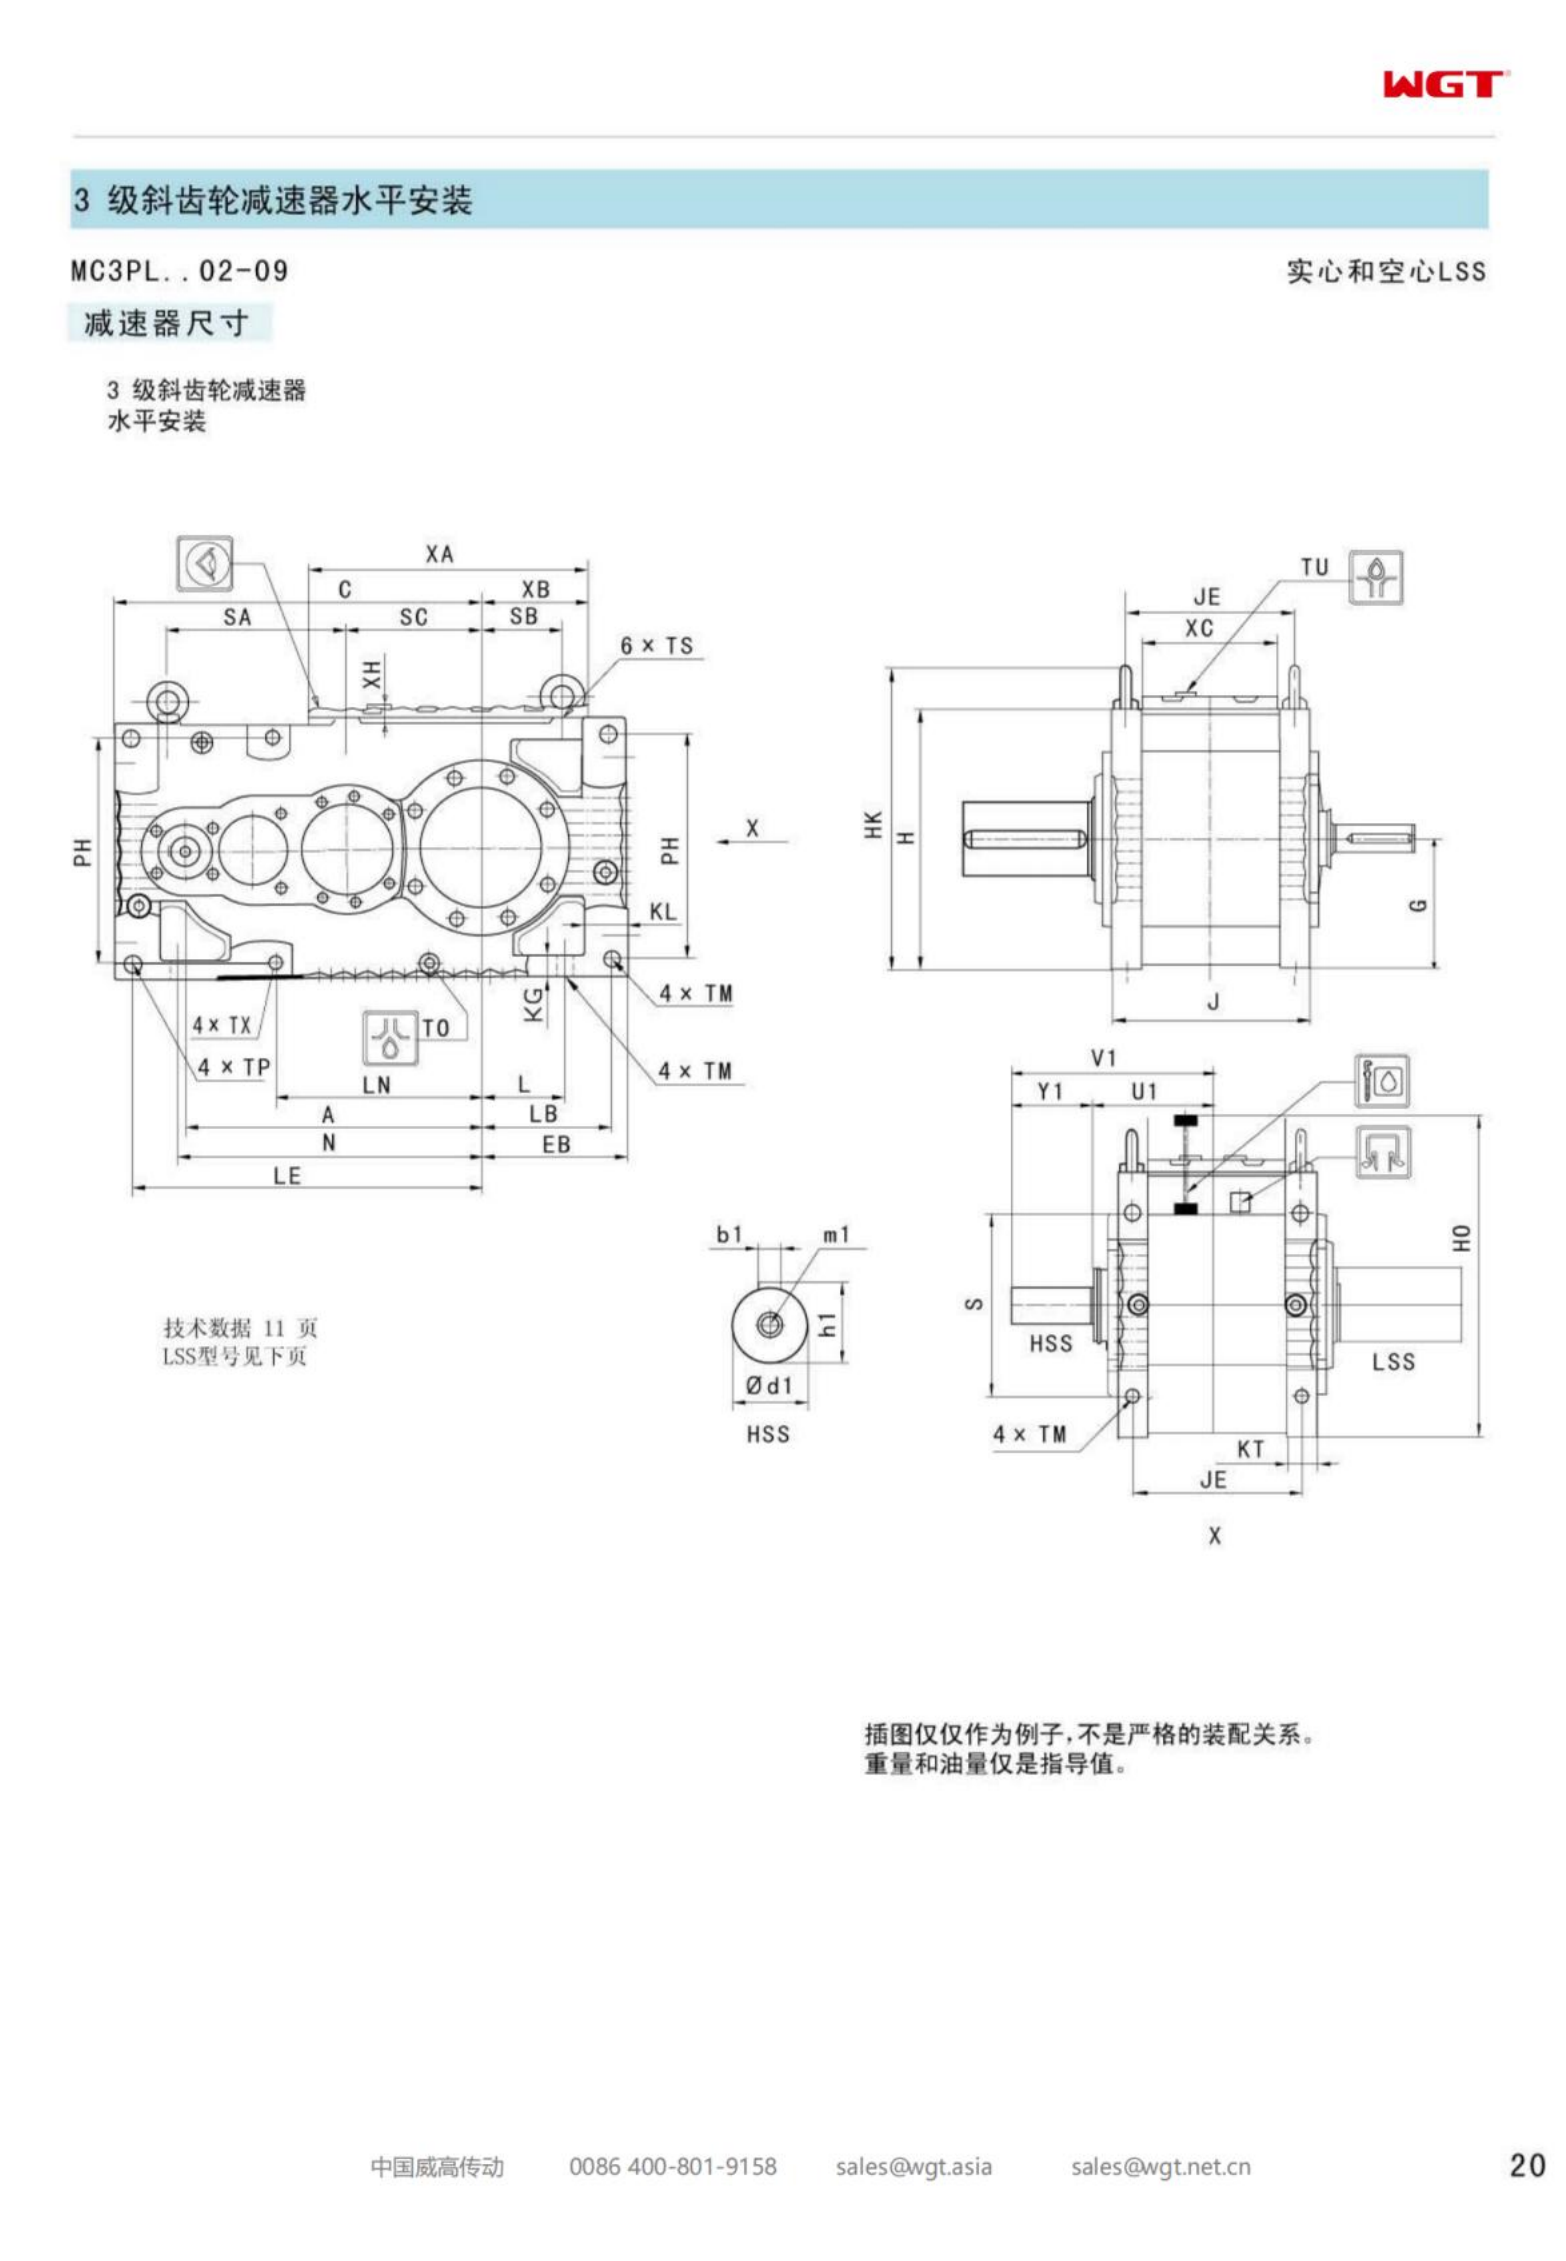 MC3PLHF08 replaces _SEW_MC_Series gearbox (patent)